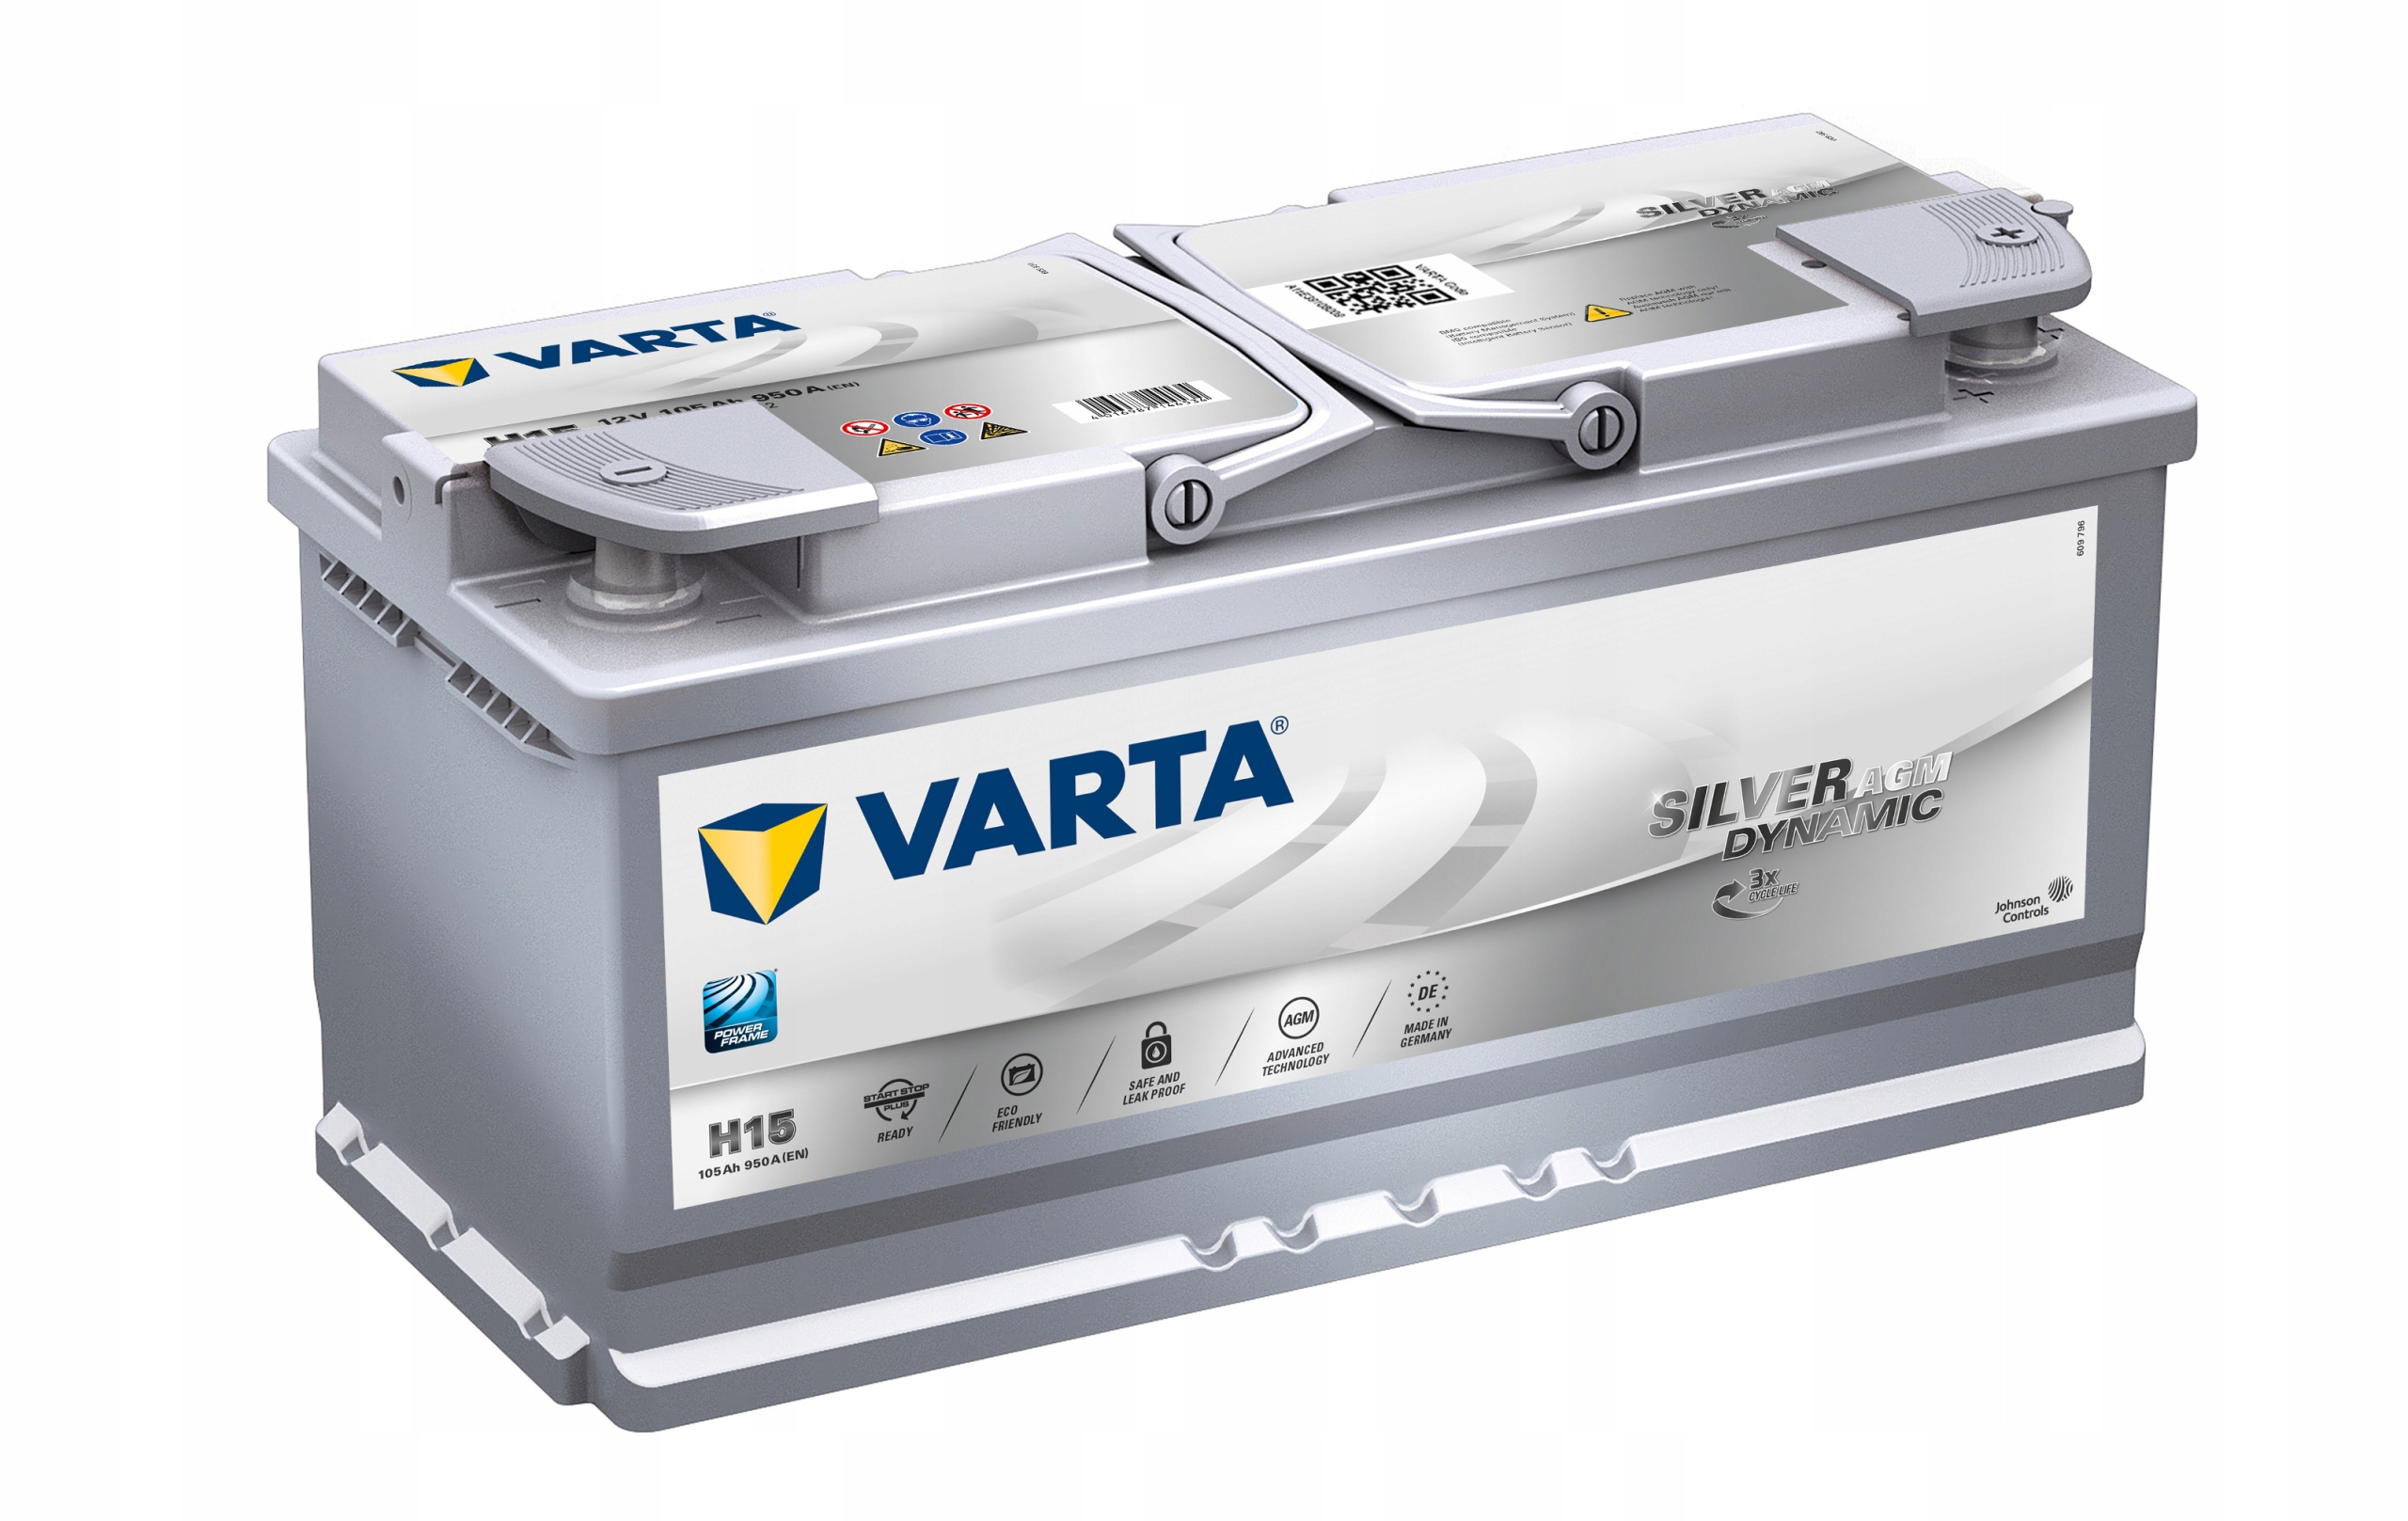 Аккумулятор start agm. 595901085 Varta. Varta 7p0915105. 605901095 Varta. Varta Silver Dynamic g14.